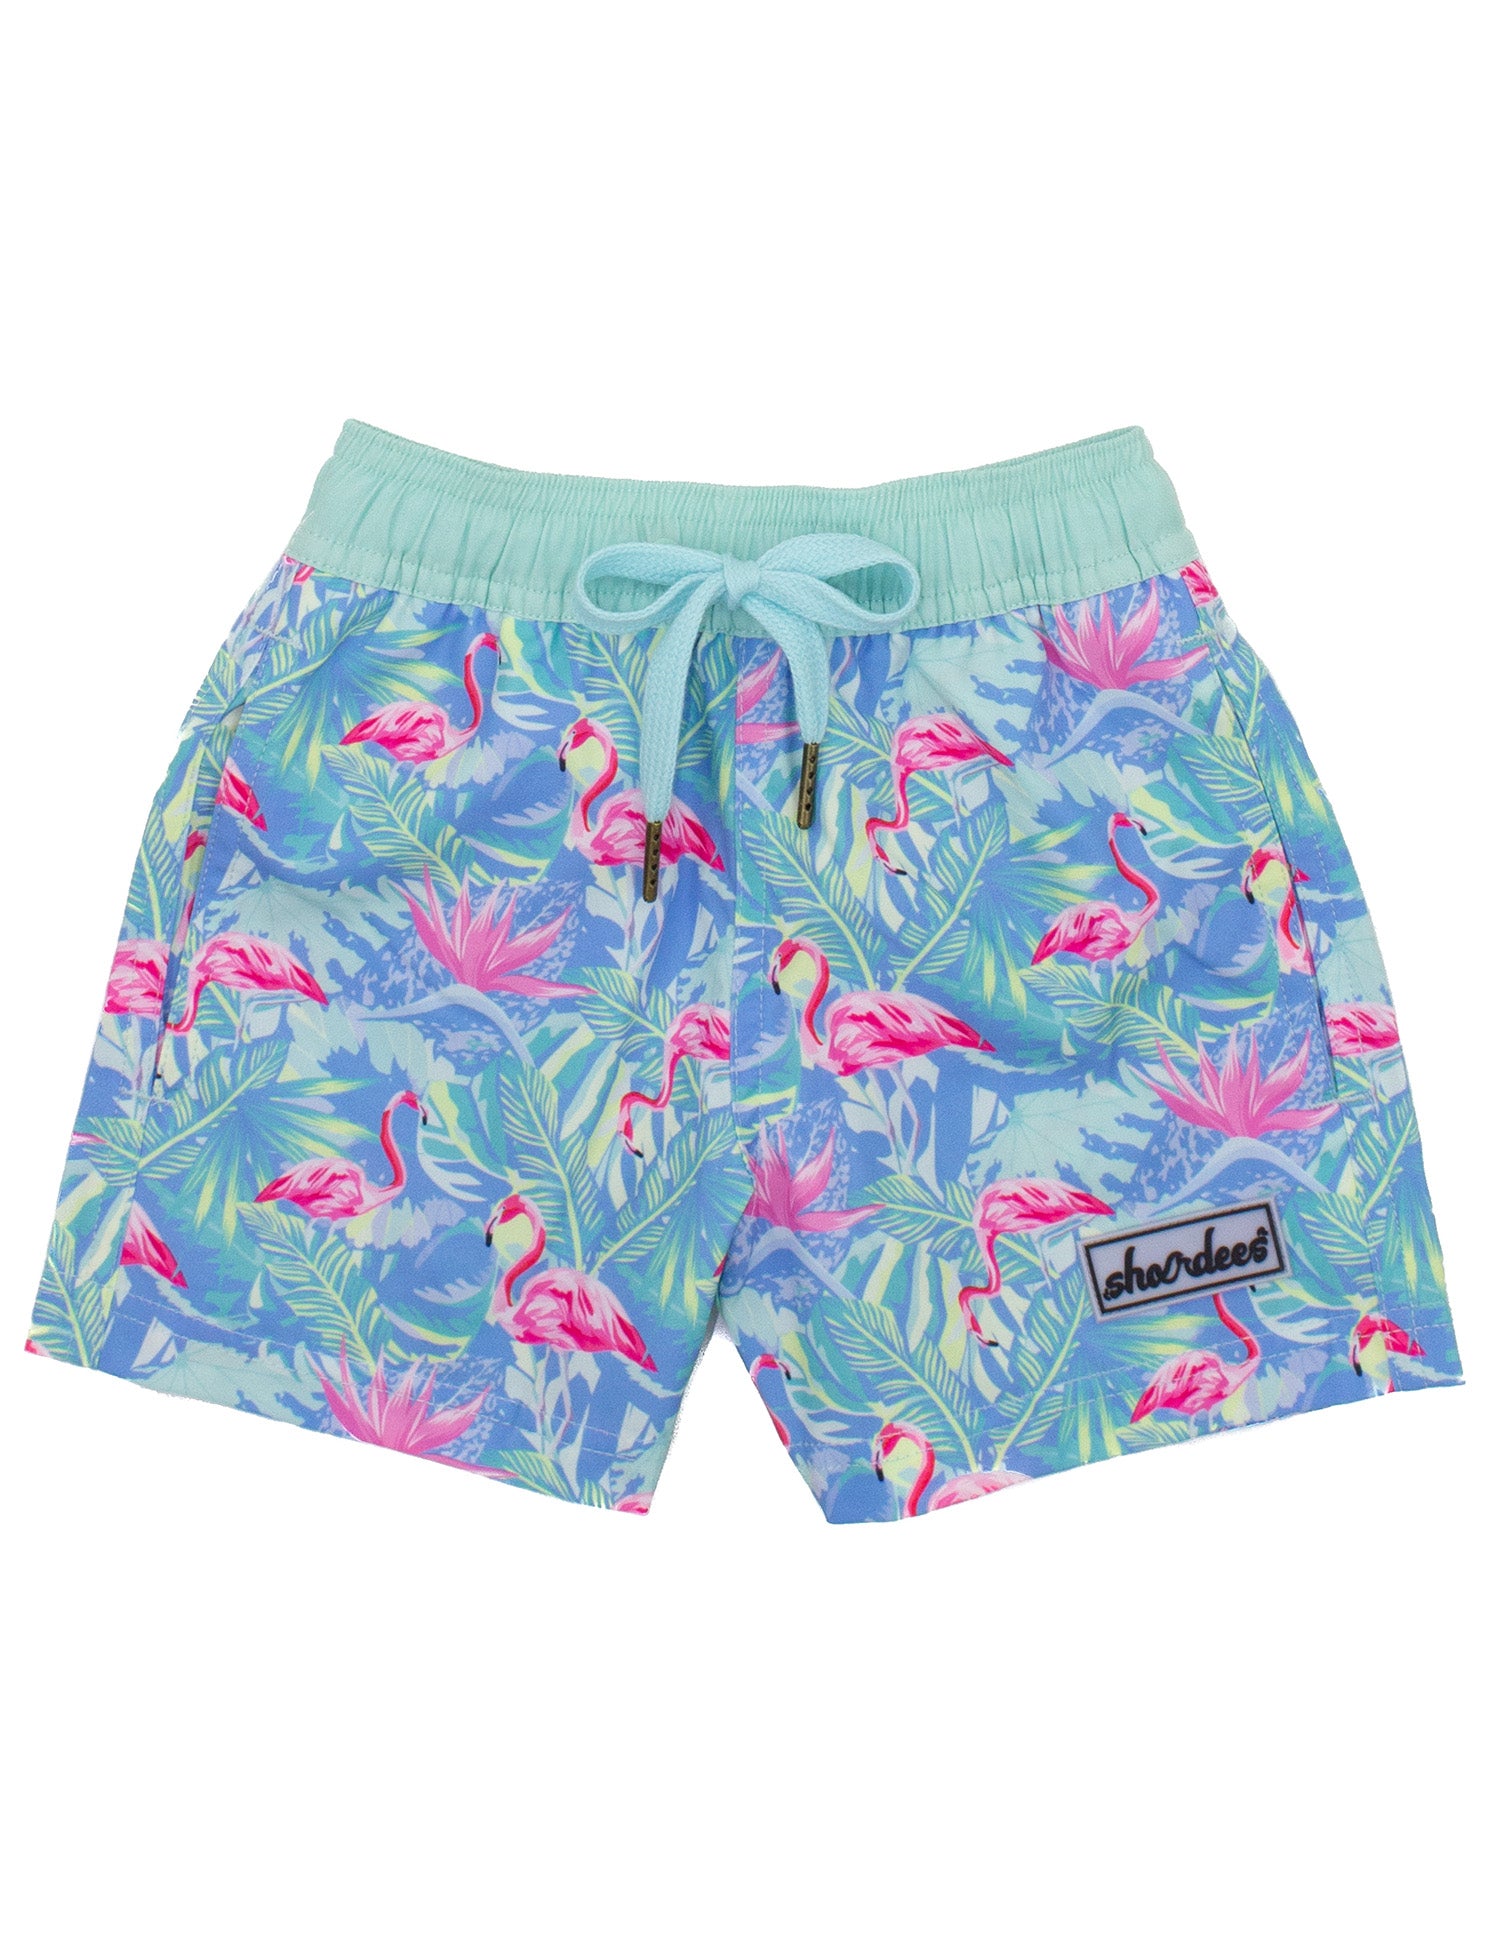 Boys Shordees Swim Trunk Floral Flamingo